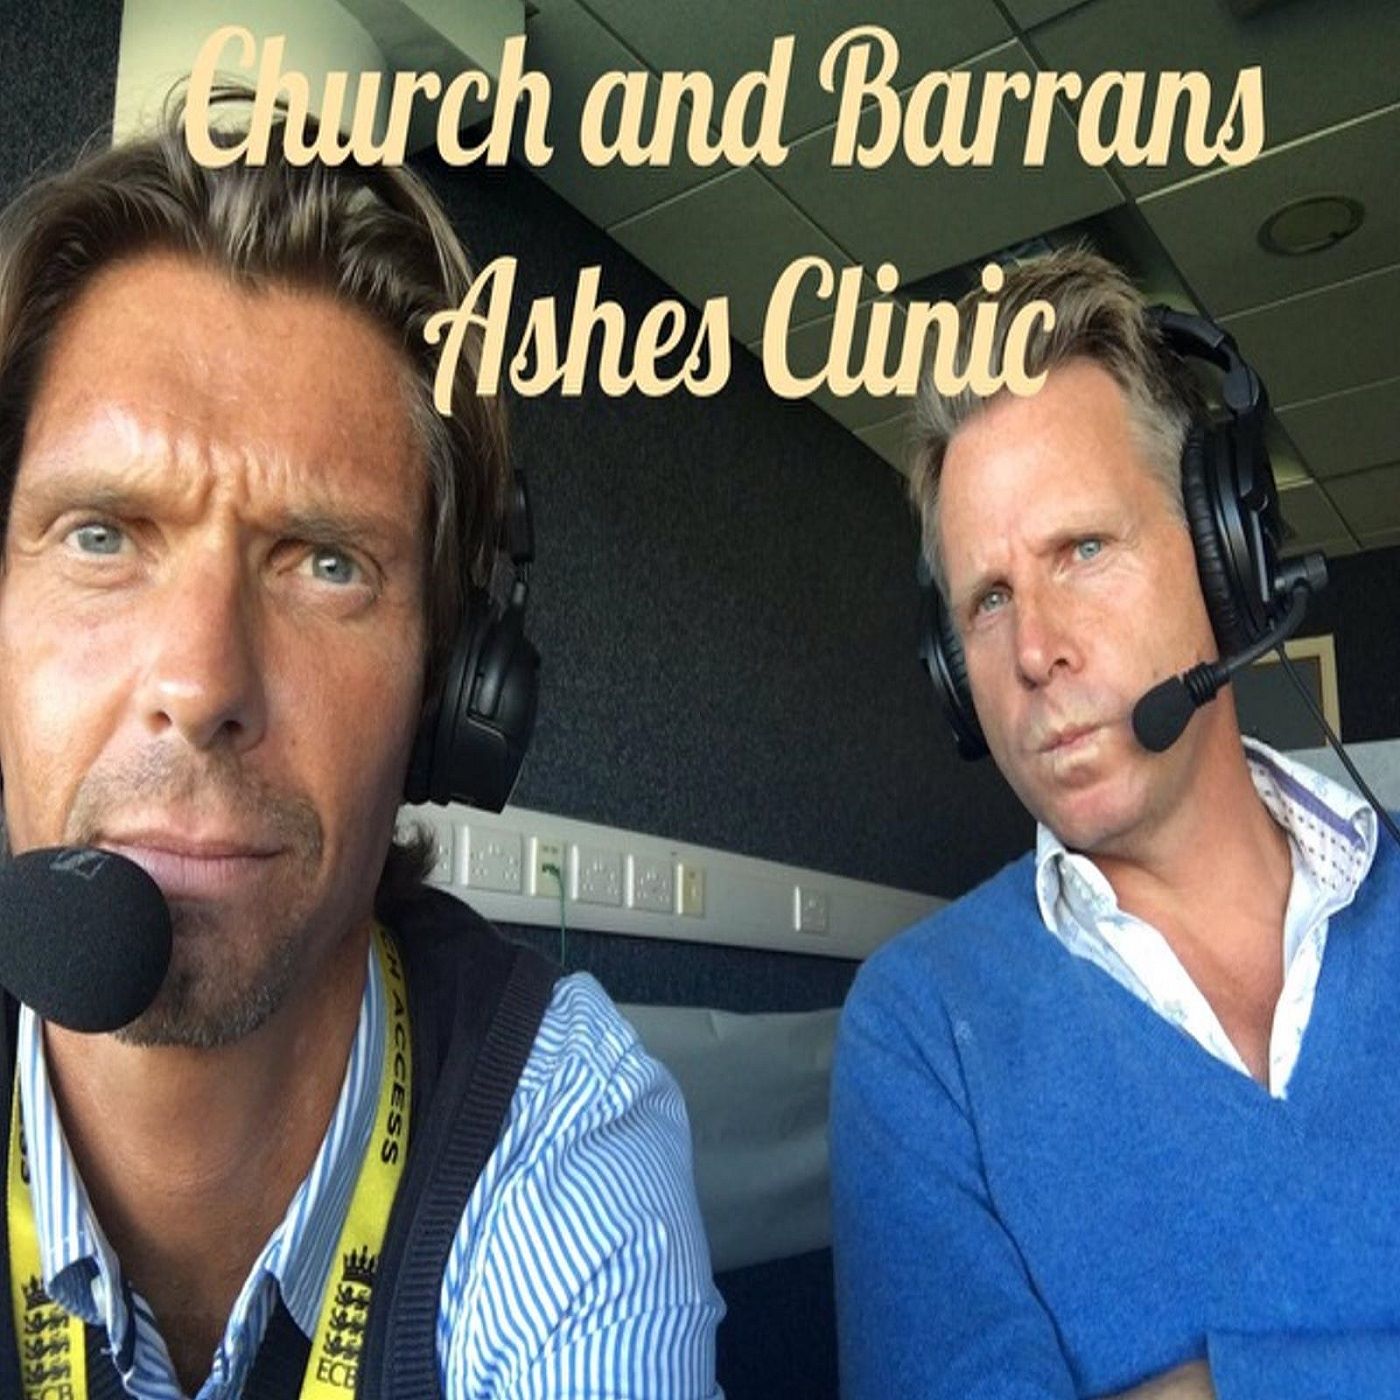 Church and Barran's Ashes Clinic